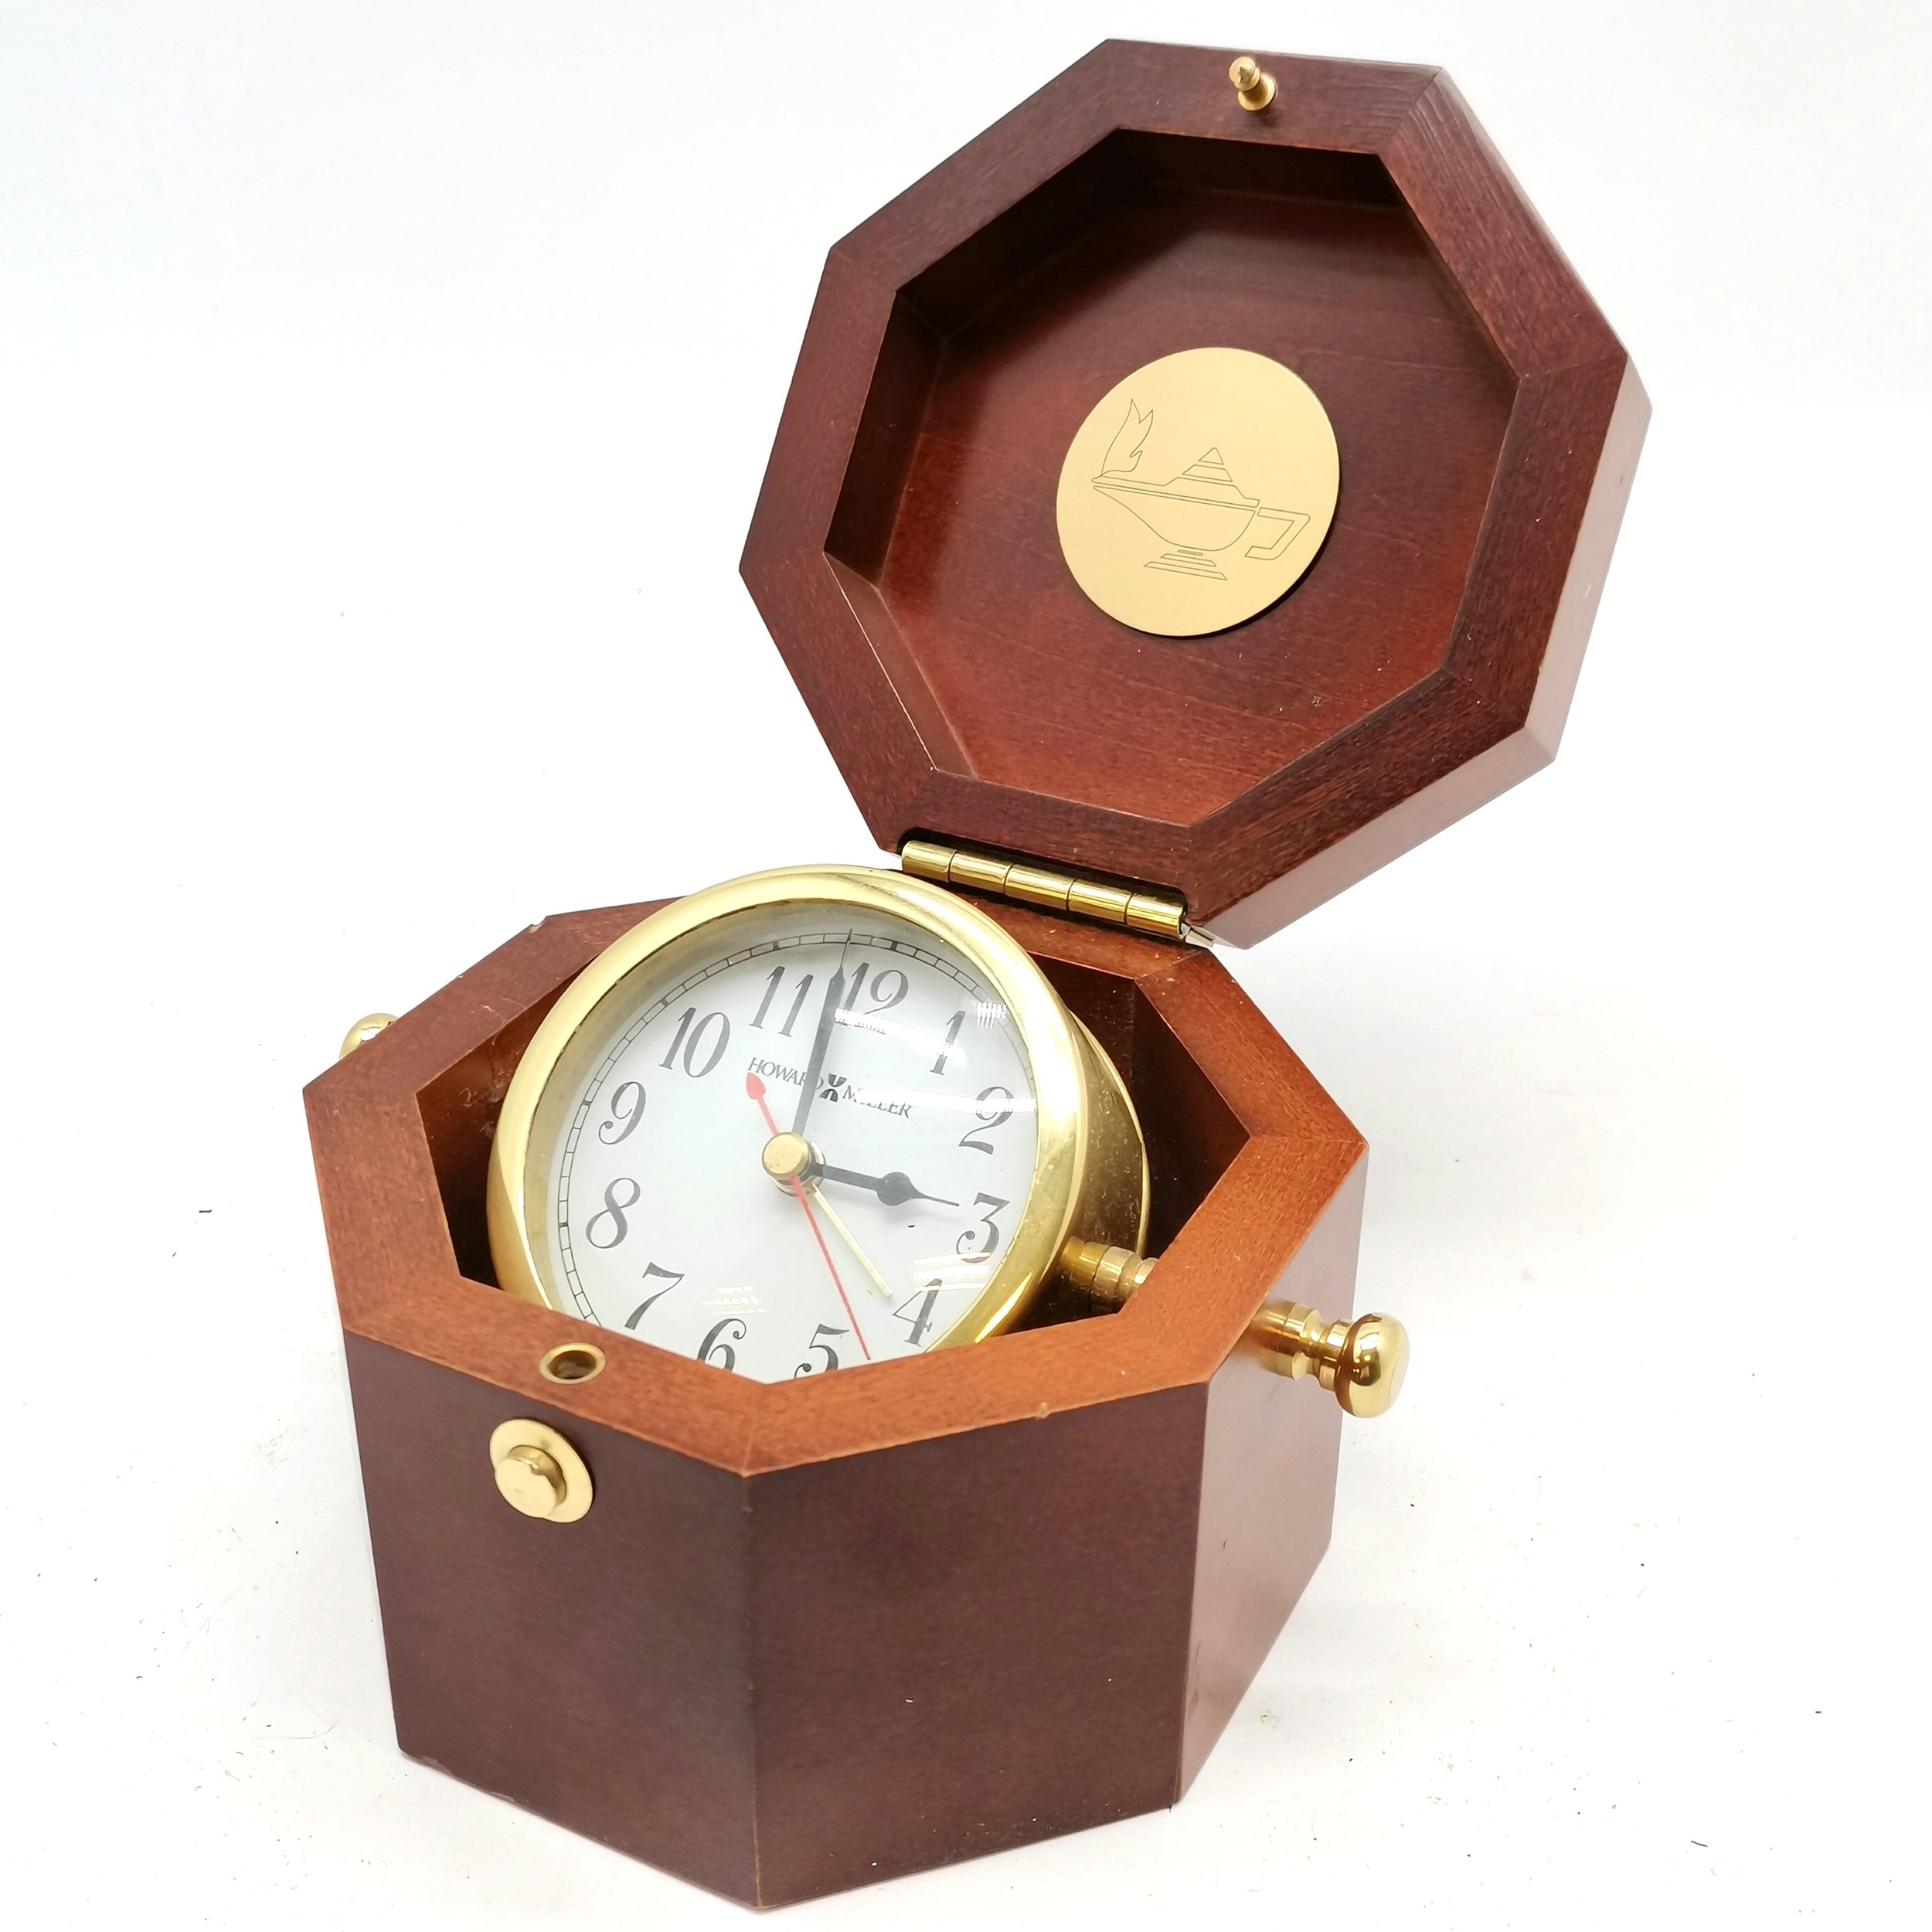 Howard Miller quartz clock in an octagonal wooden box - 14.5cm x 14.5cm x 10.5cm & in used condition